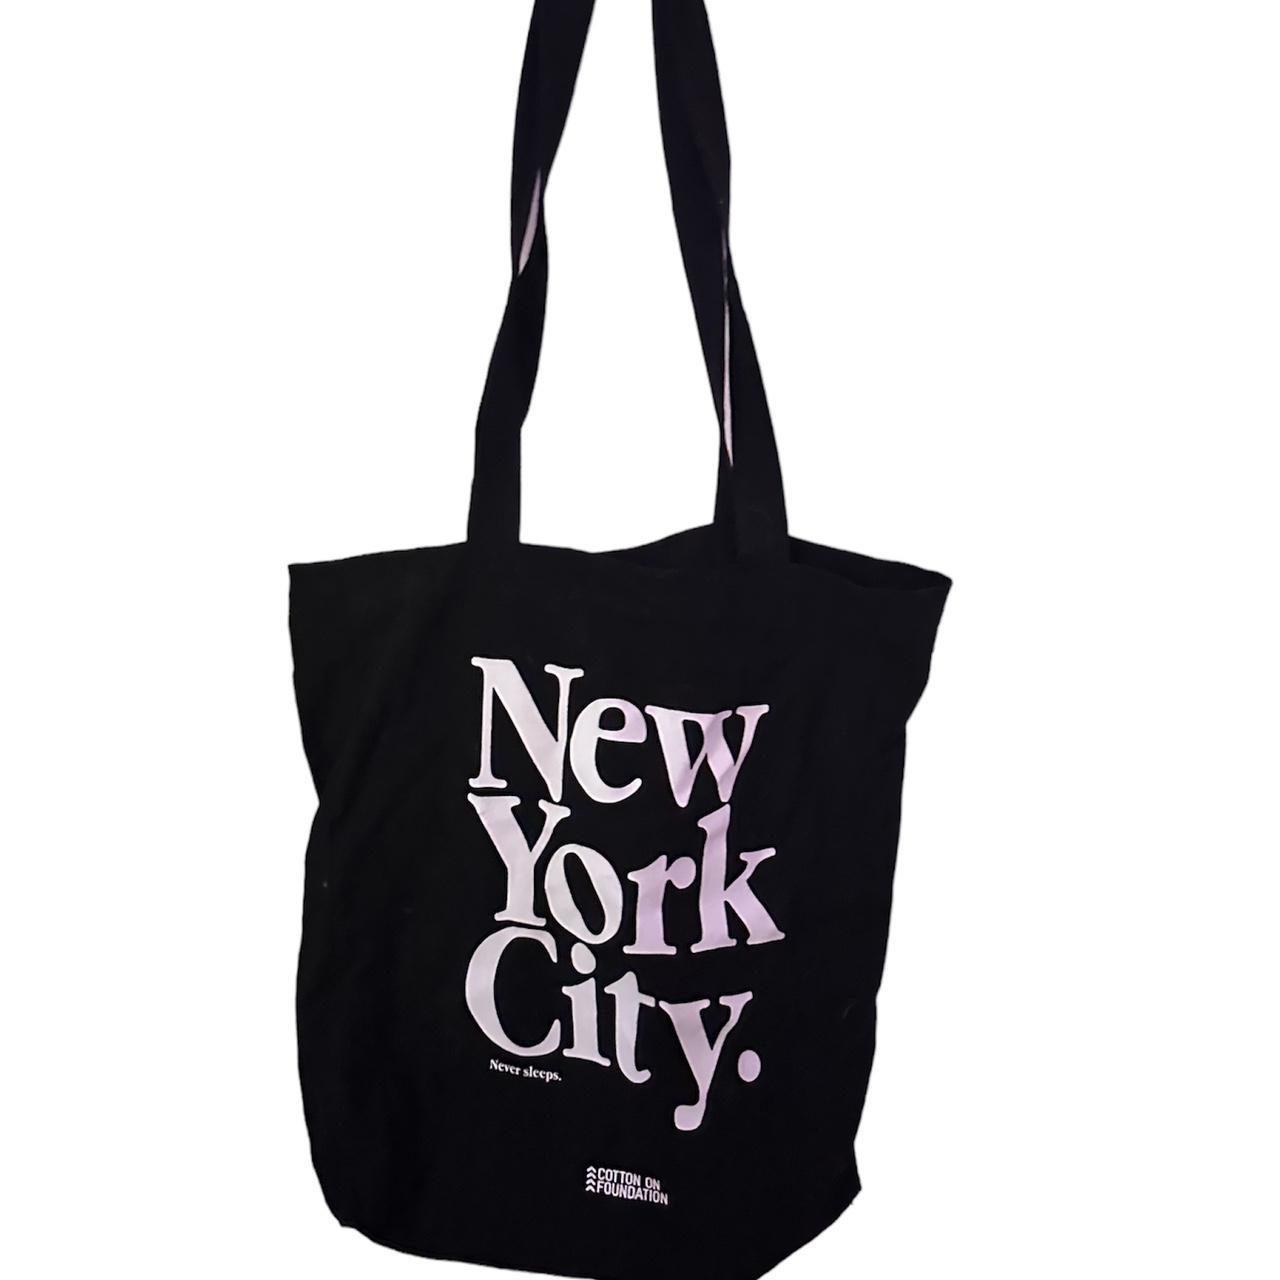 Cotton on New York City tote bag - Depop